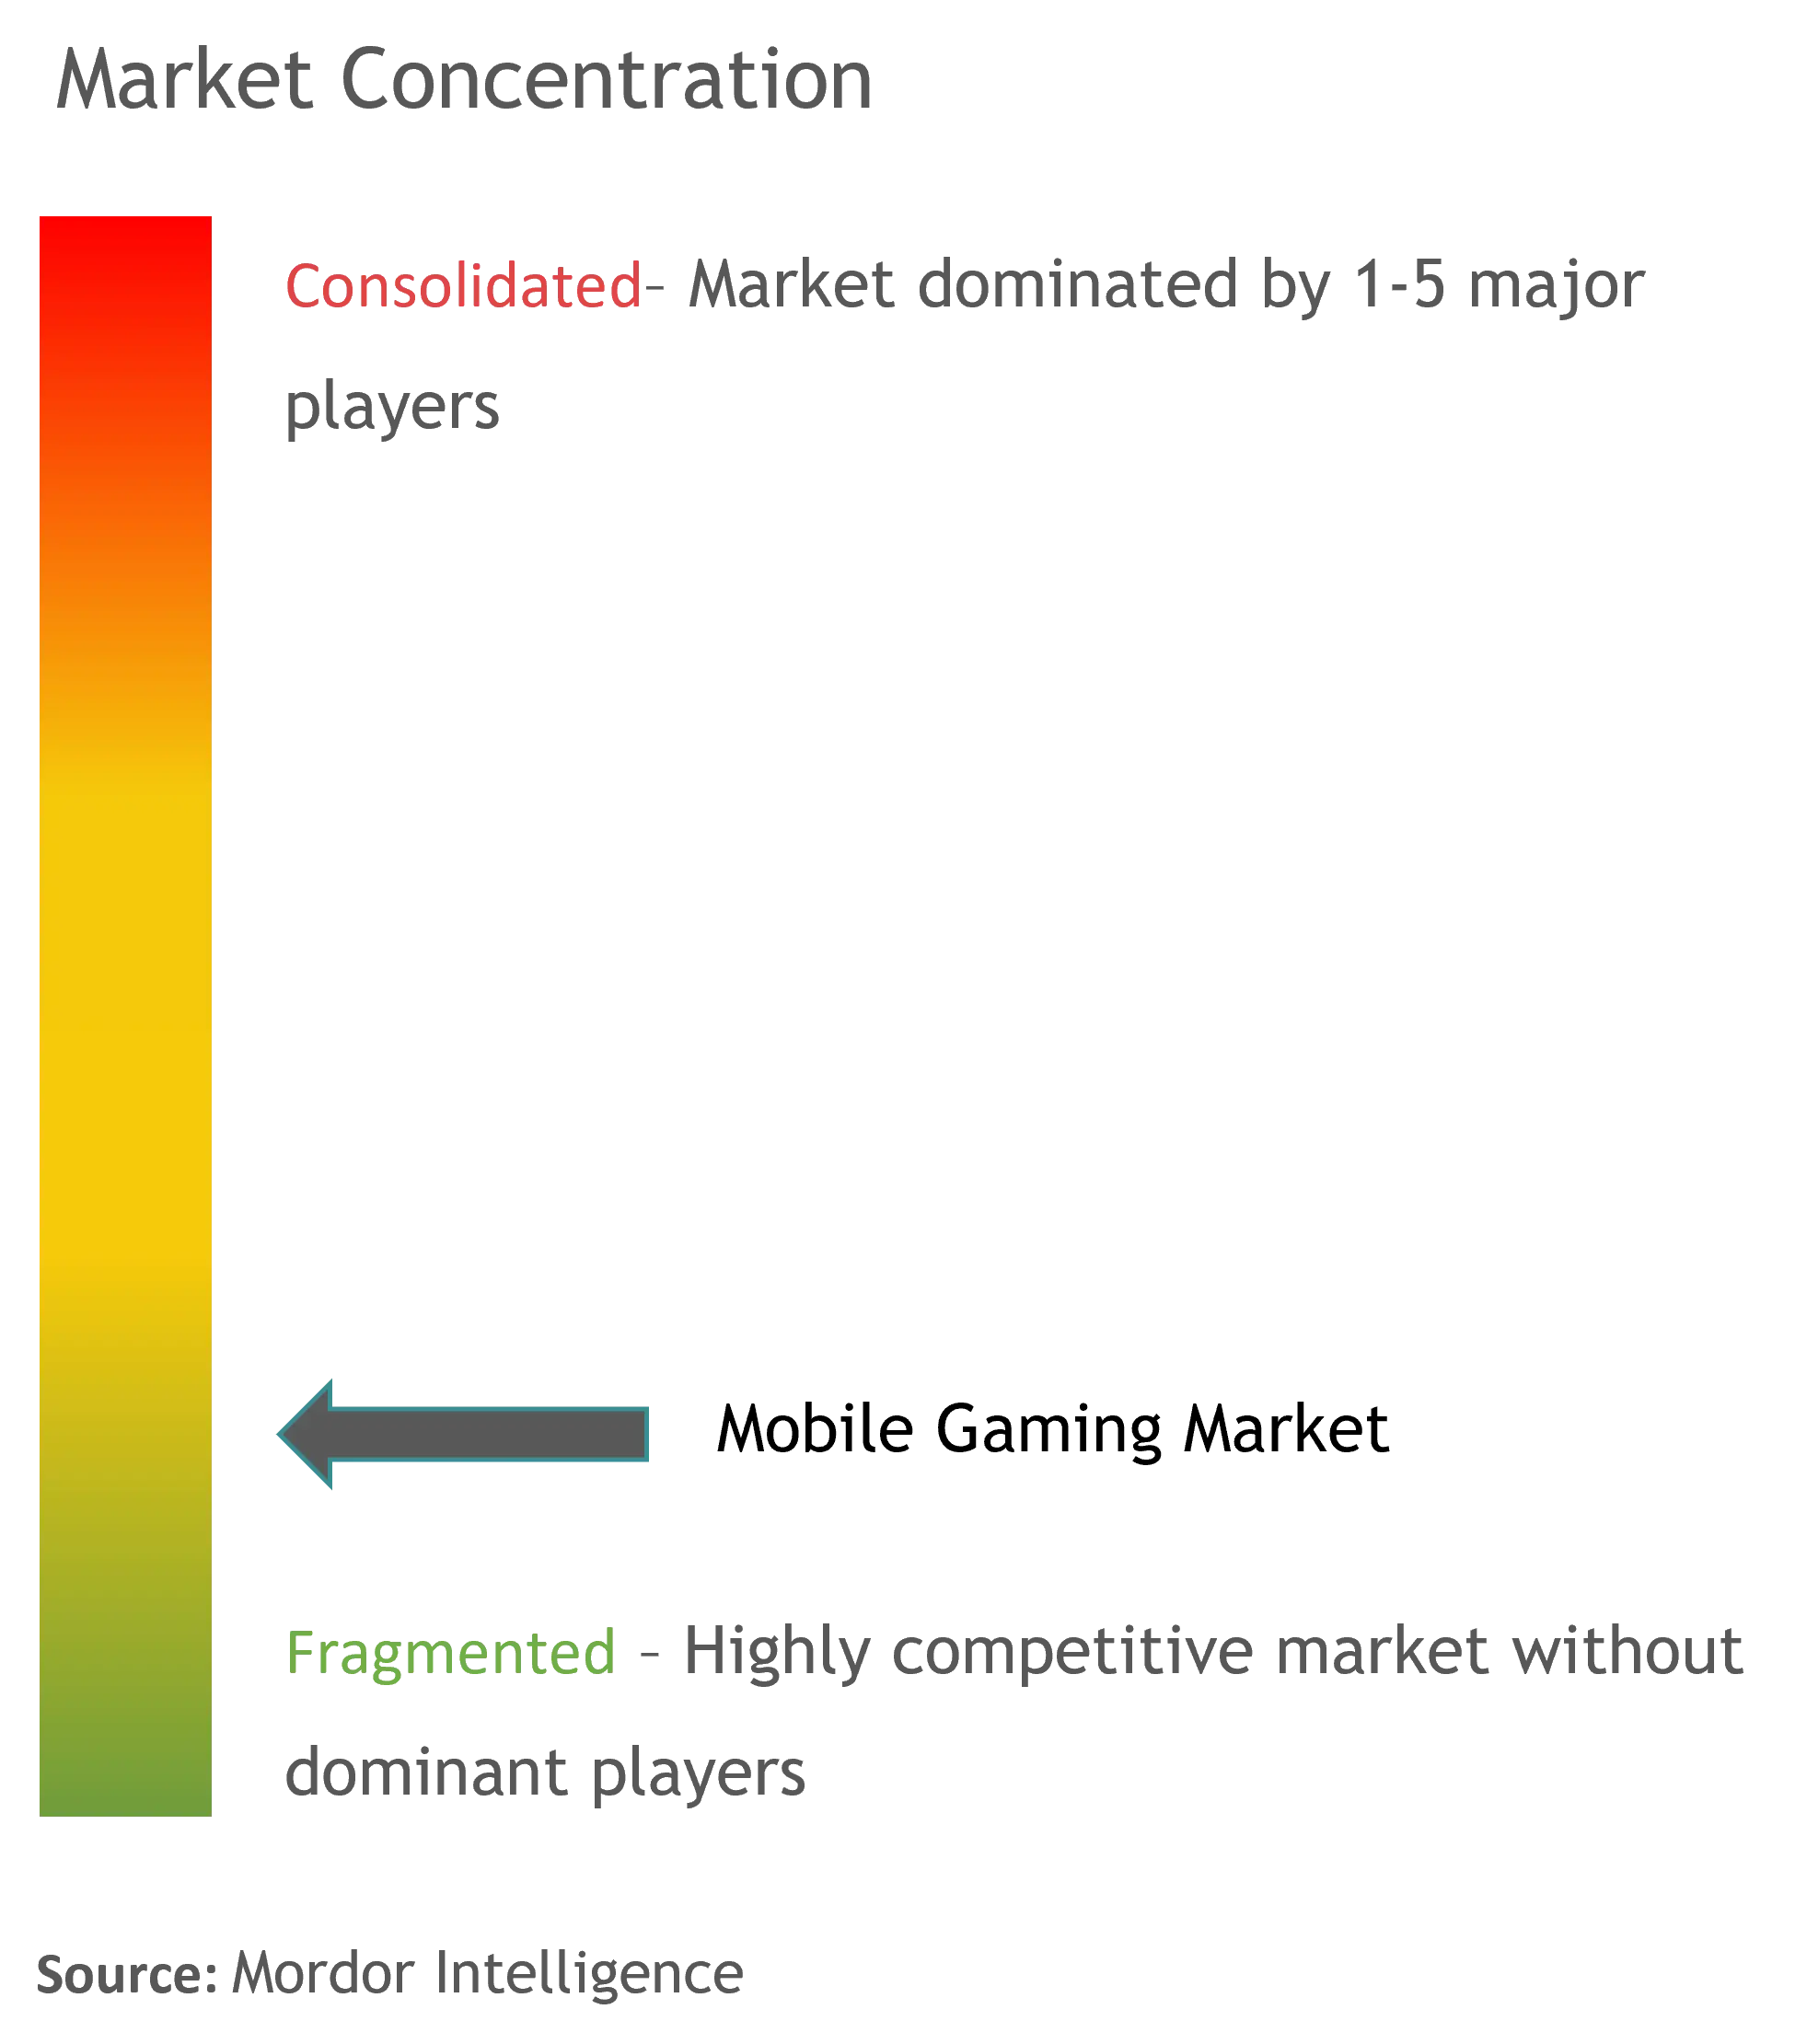 Mobile Gaming Market Concentration